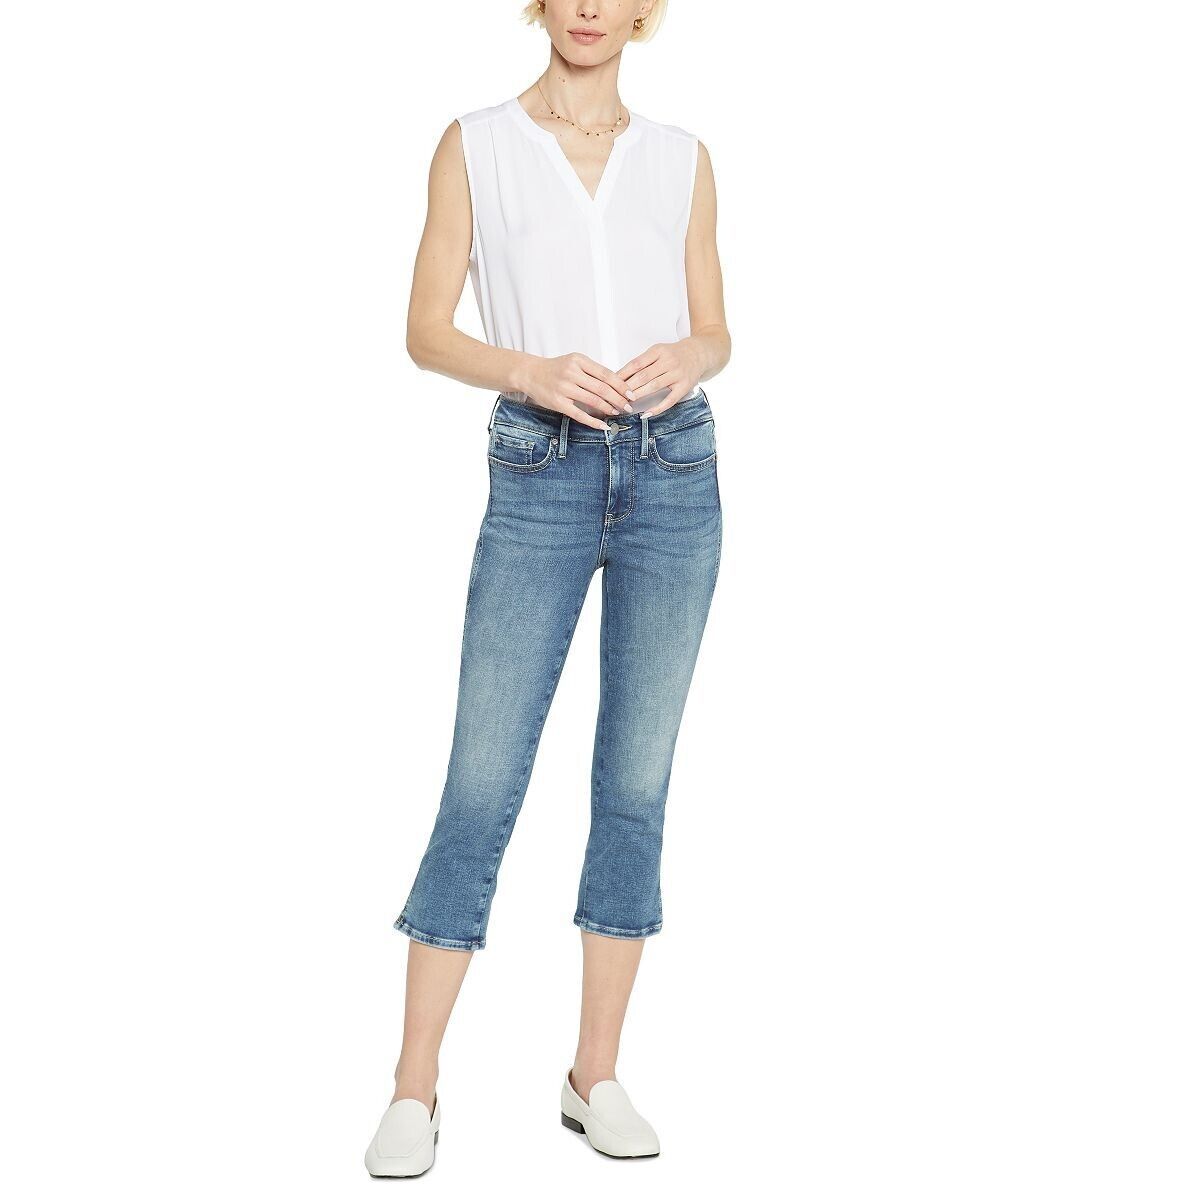 Primary image for NYDJ Women's Skinny Capri Jeans Blue Size 14 B4HP Waist 35 Inseam 23 $89